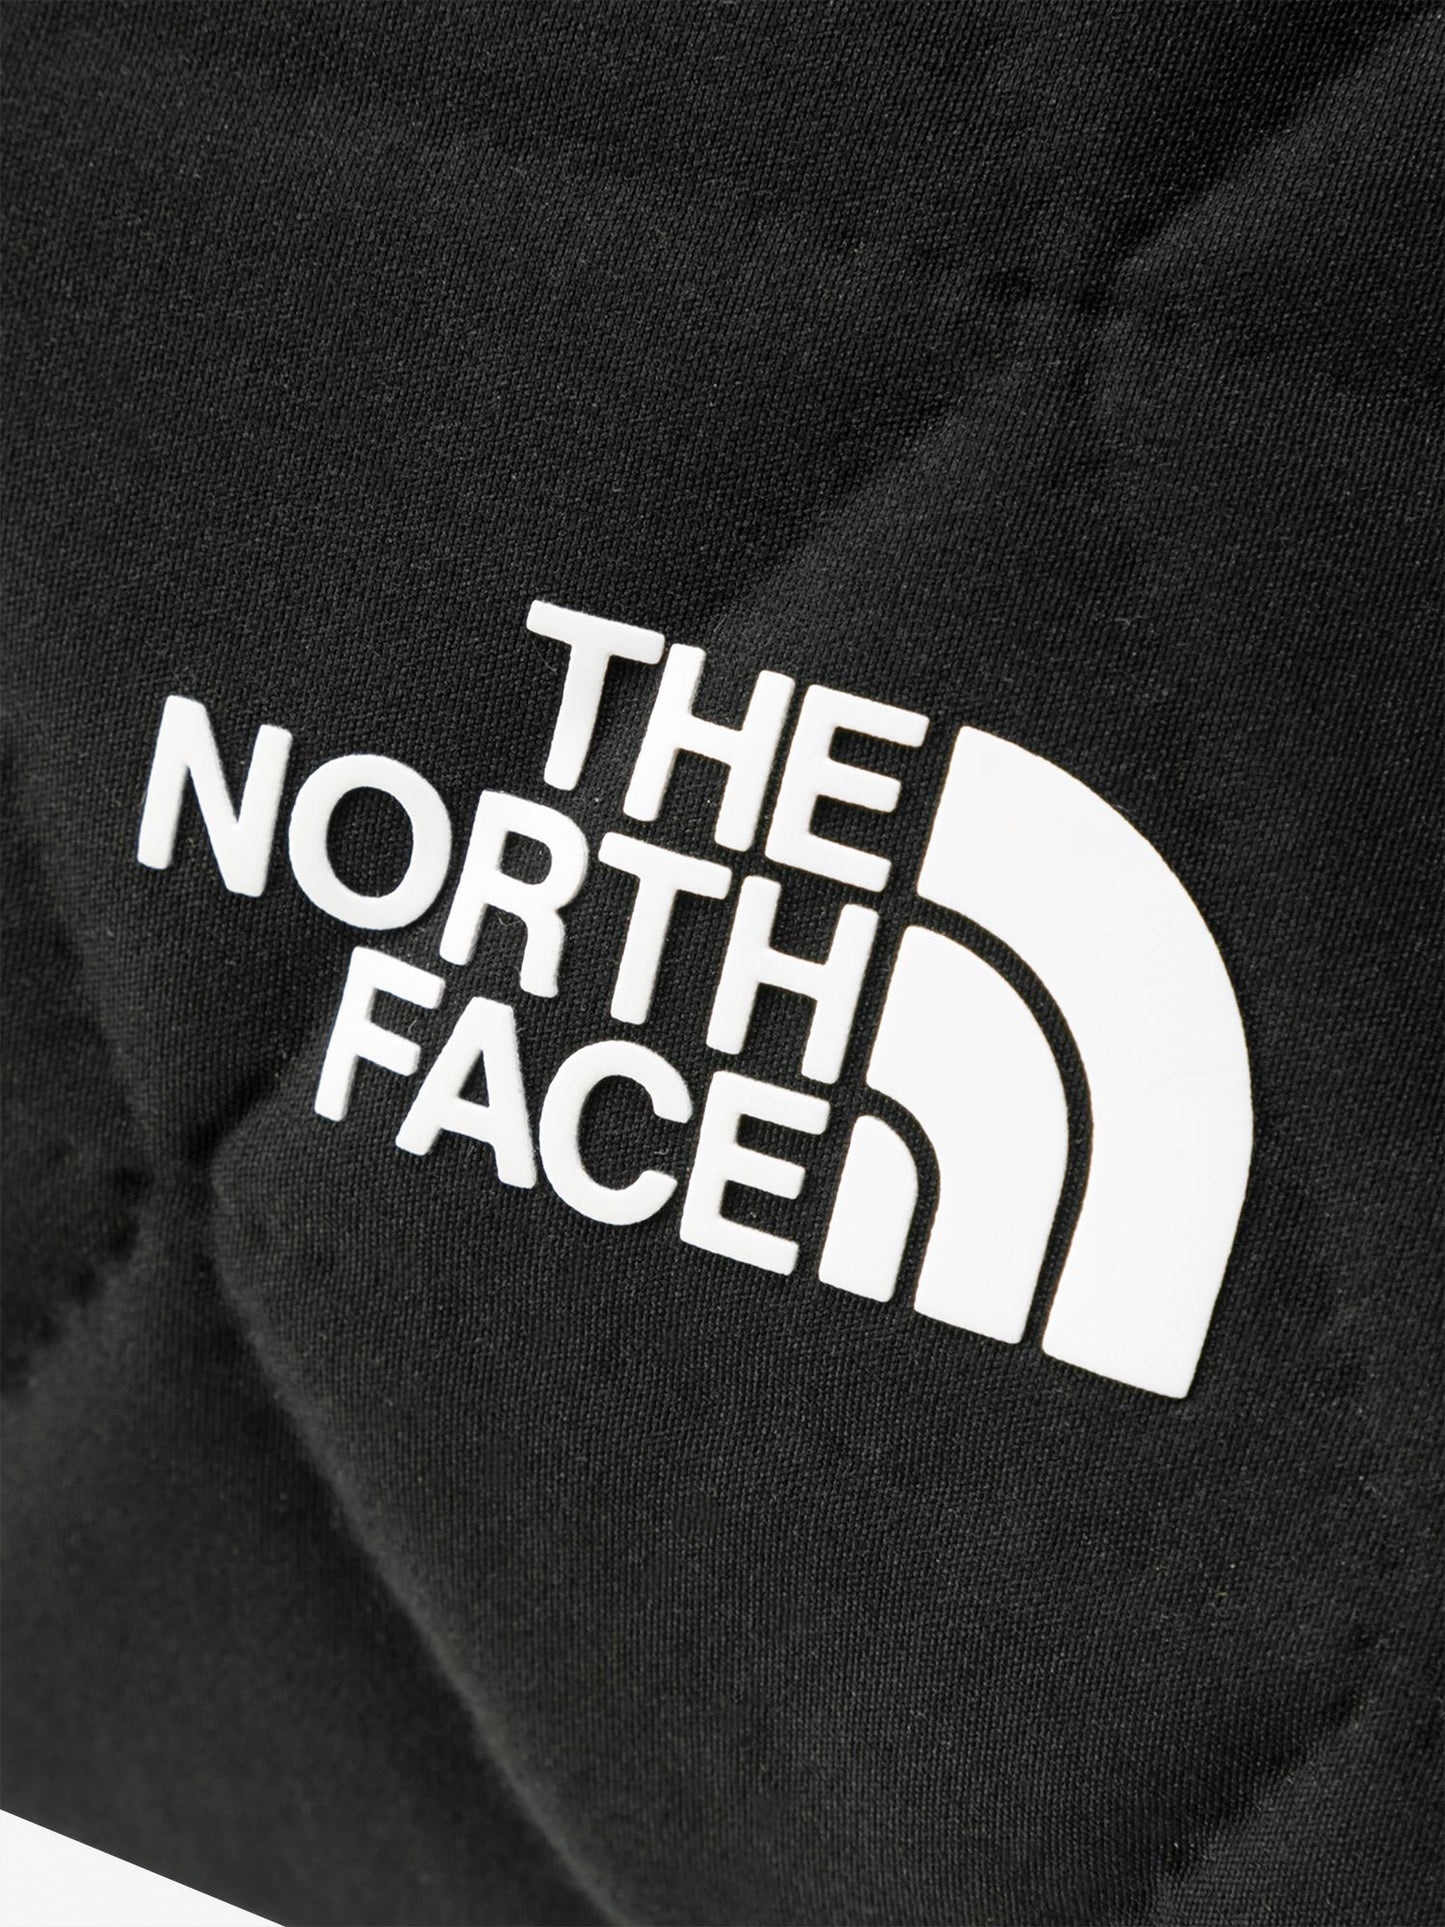 TheNorthFace(ザ・ノース・フェイス) Geoface Pouch NM32356